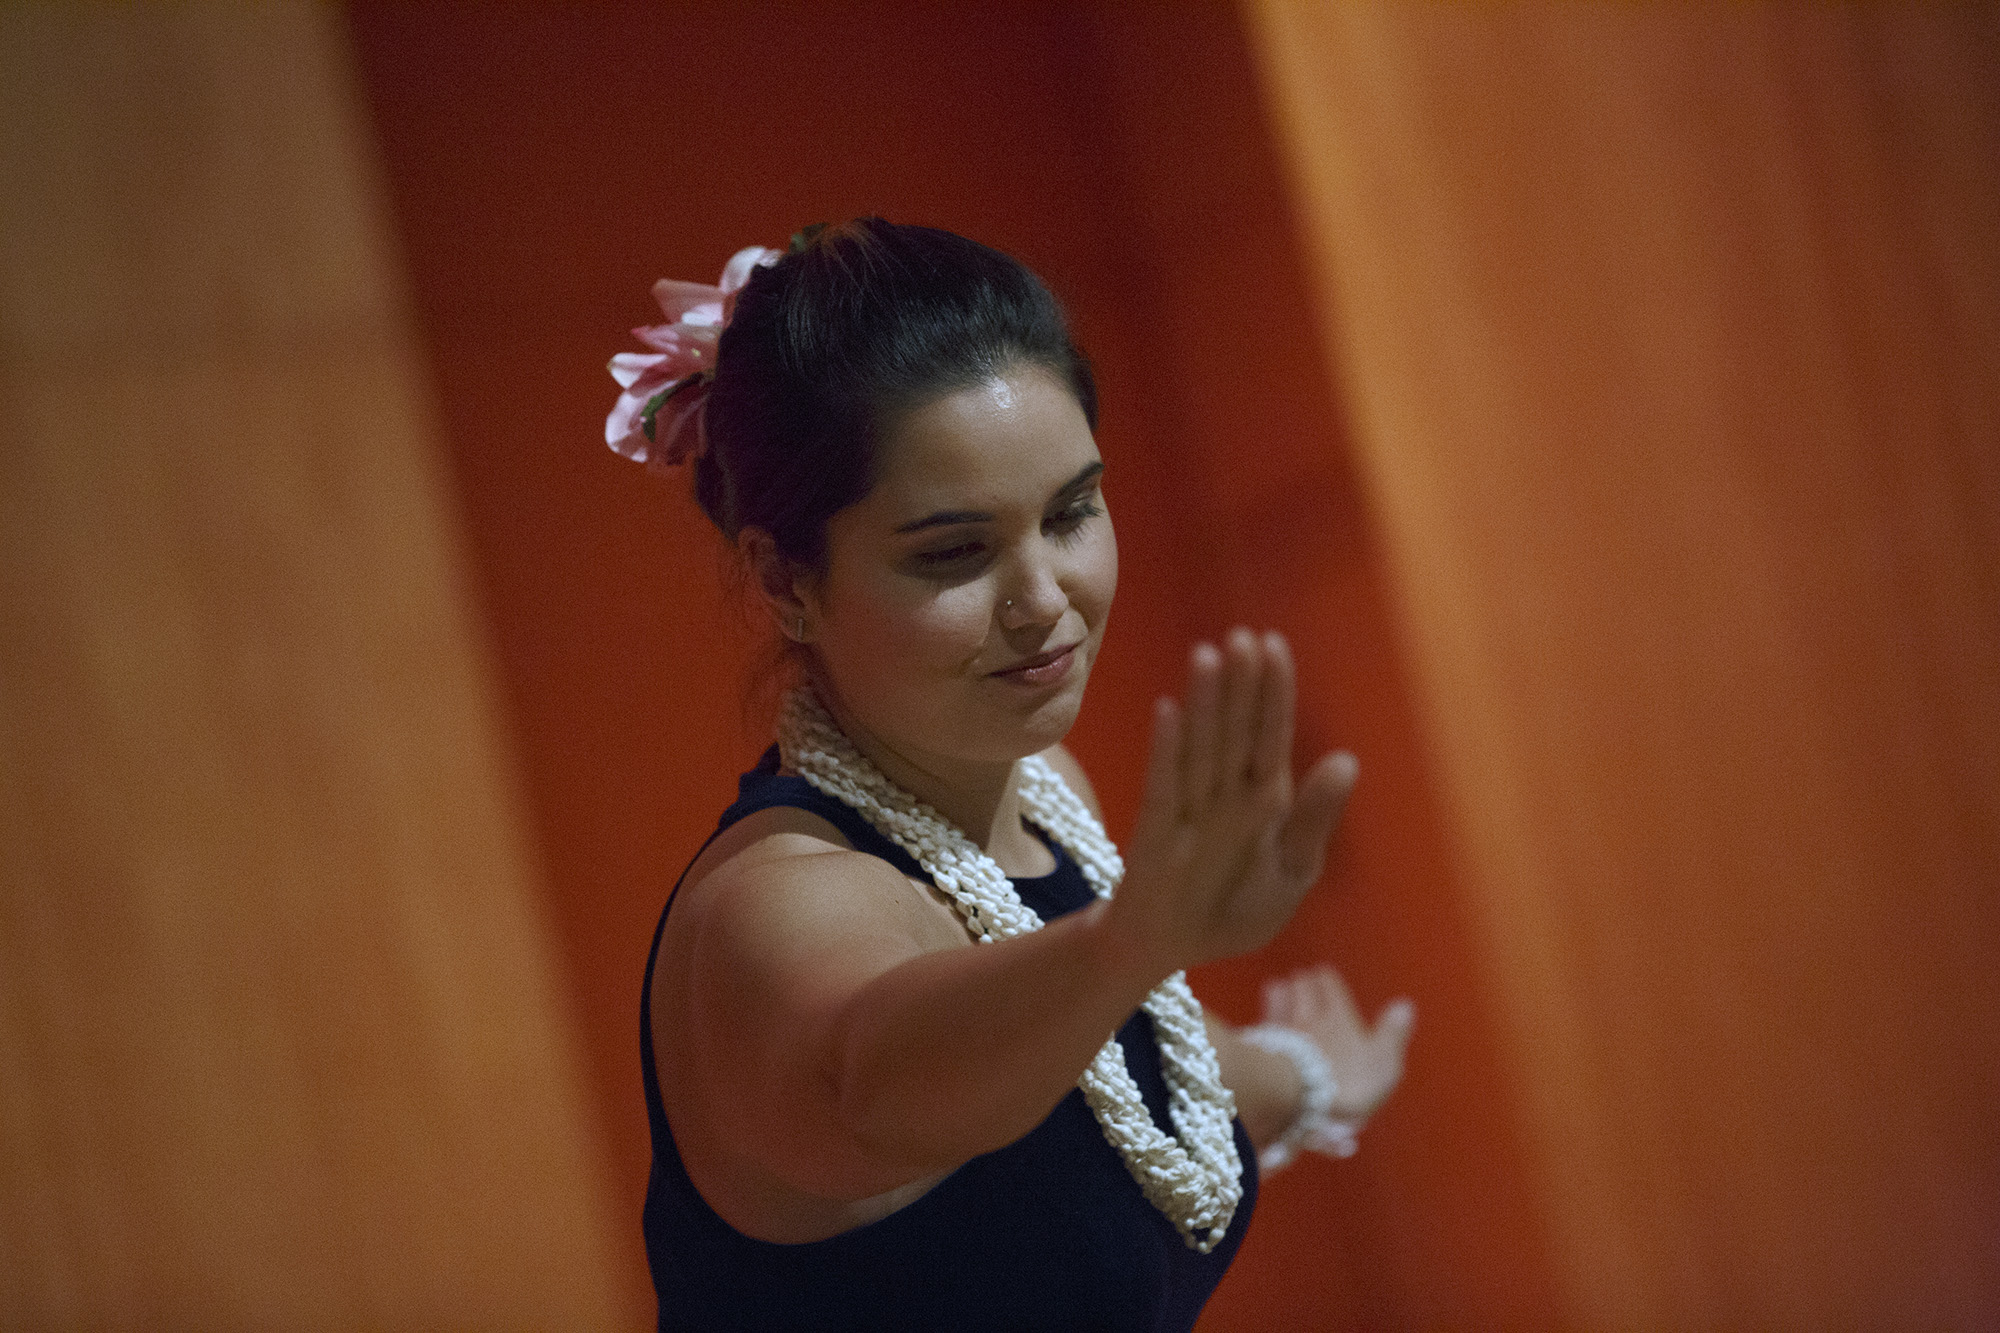 Tanya Saito performs a dance at the Donor Memorial Service, December 1, 2017.